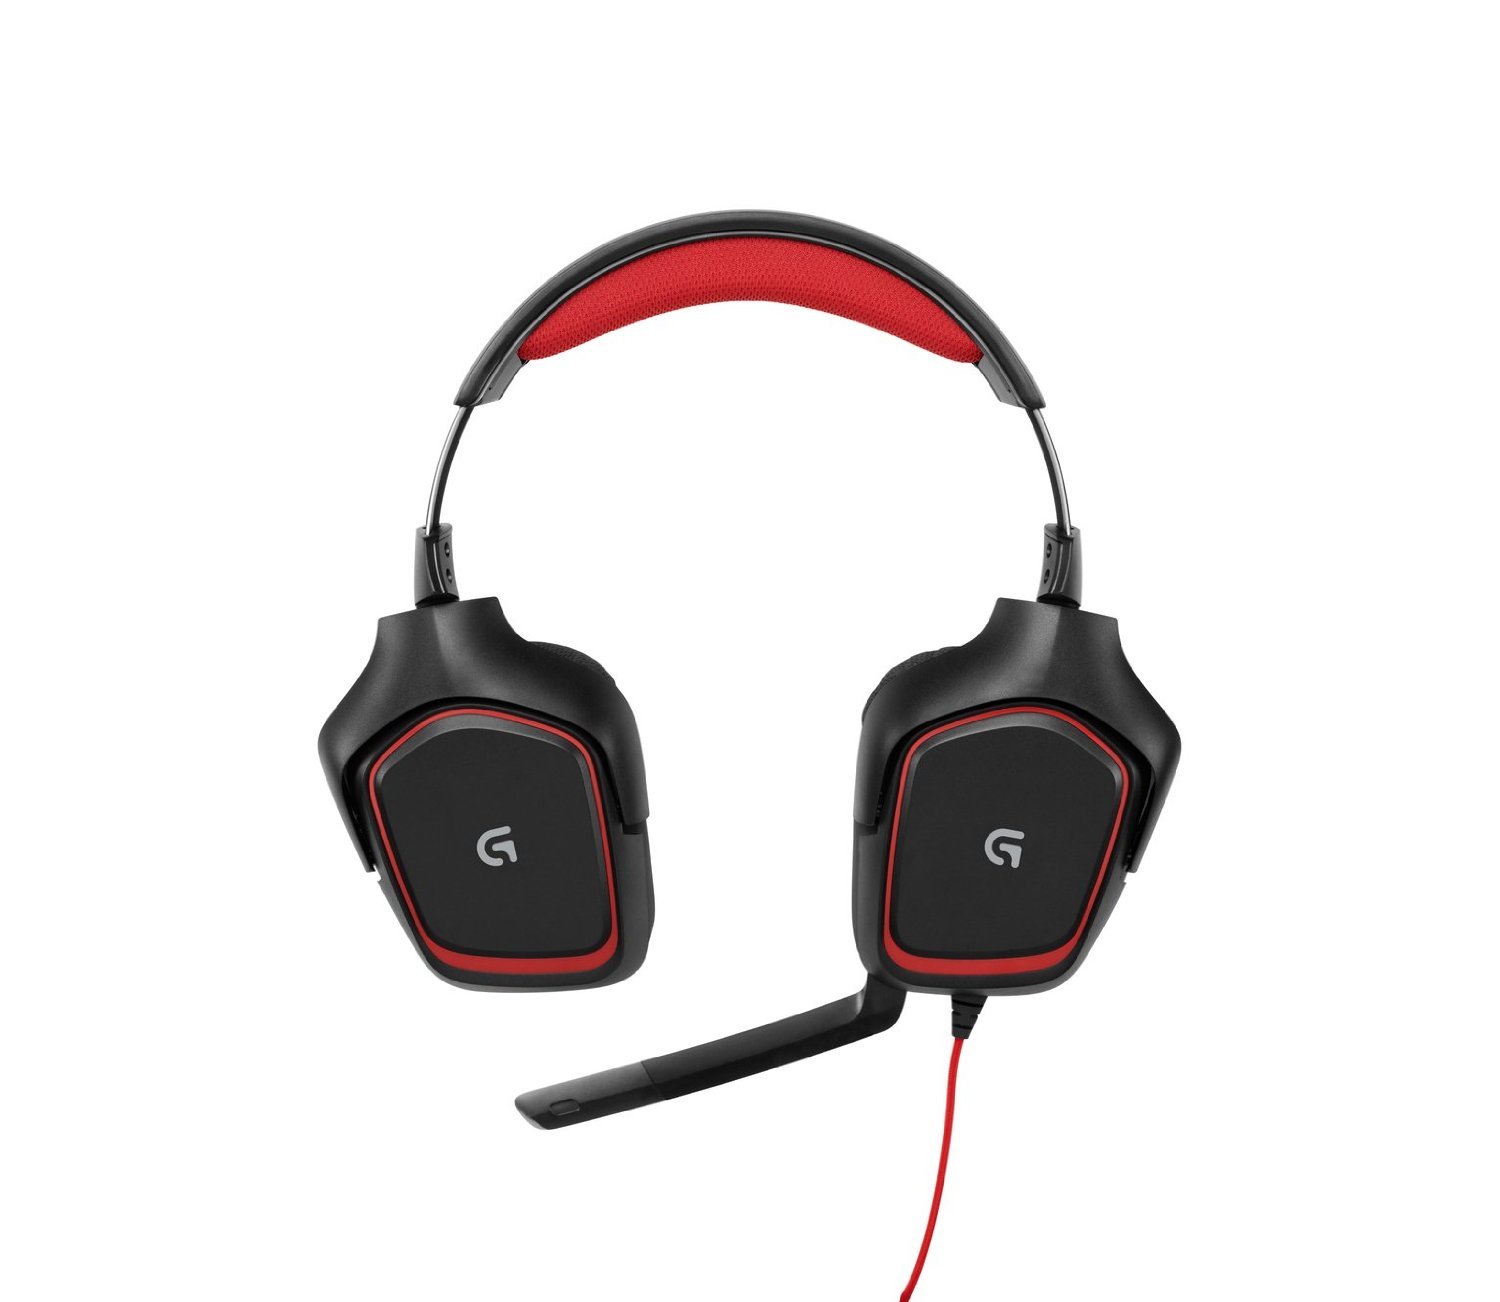 Logitech G230 Gaming Headset